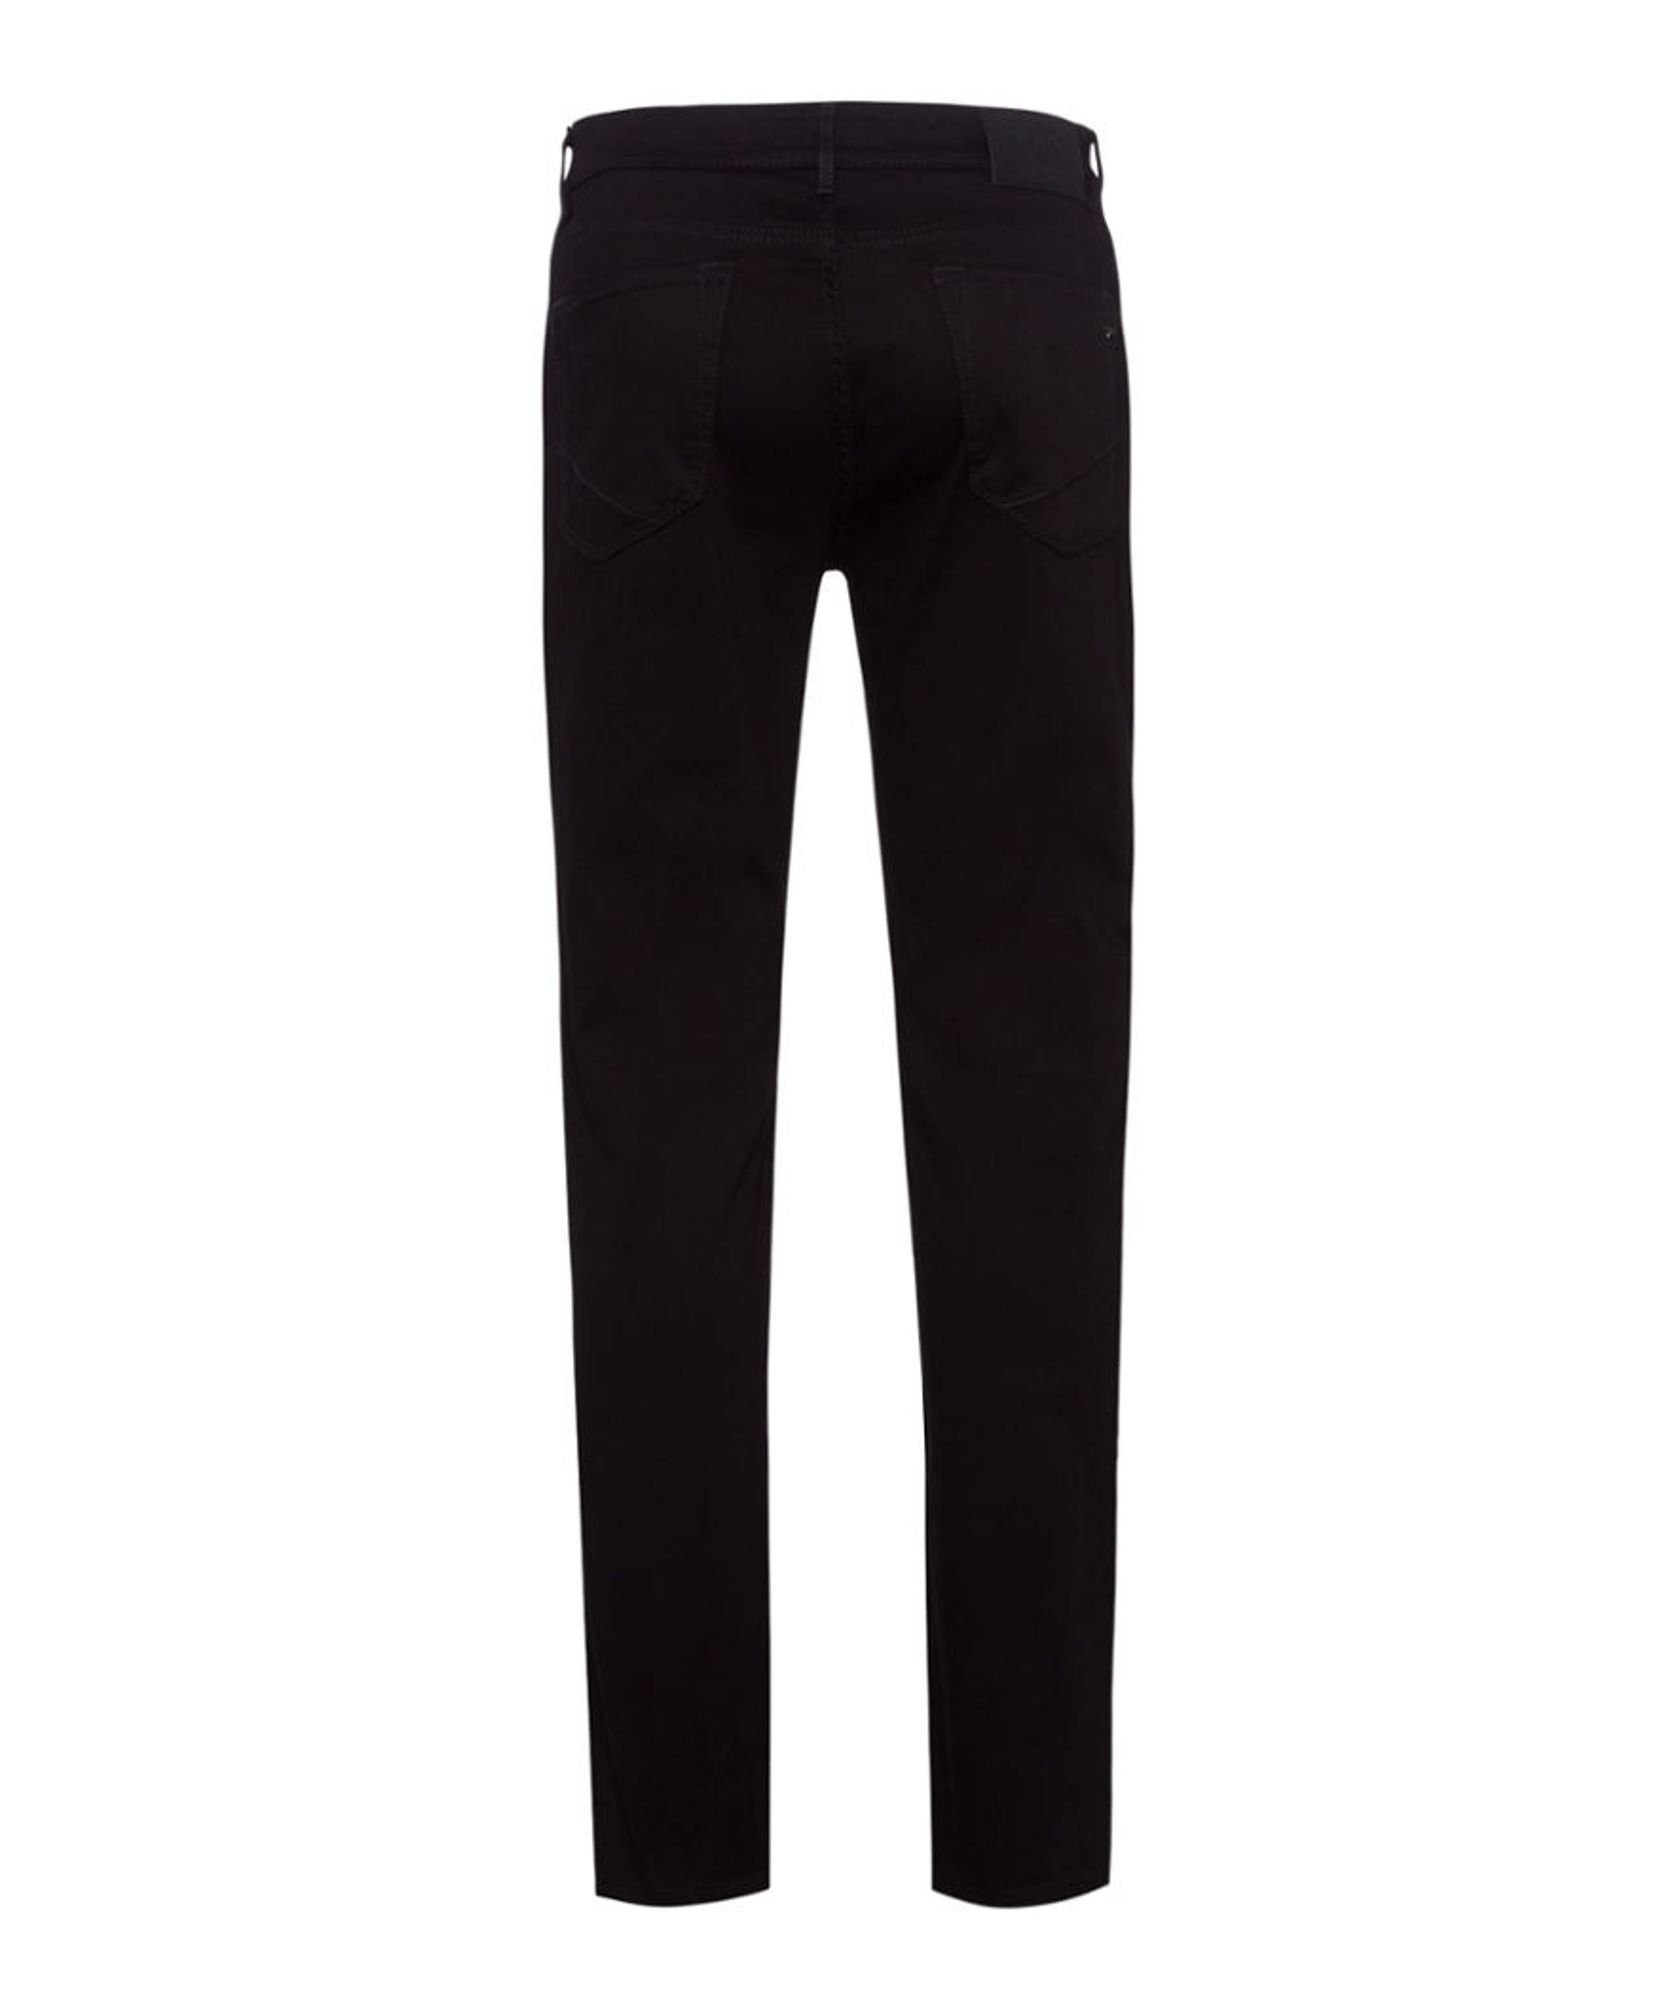 (01) 5-Pocket-Jeans Brax 80-6450 Perma Black